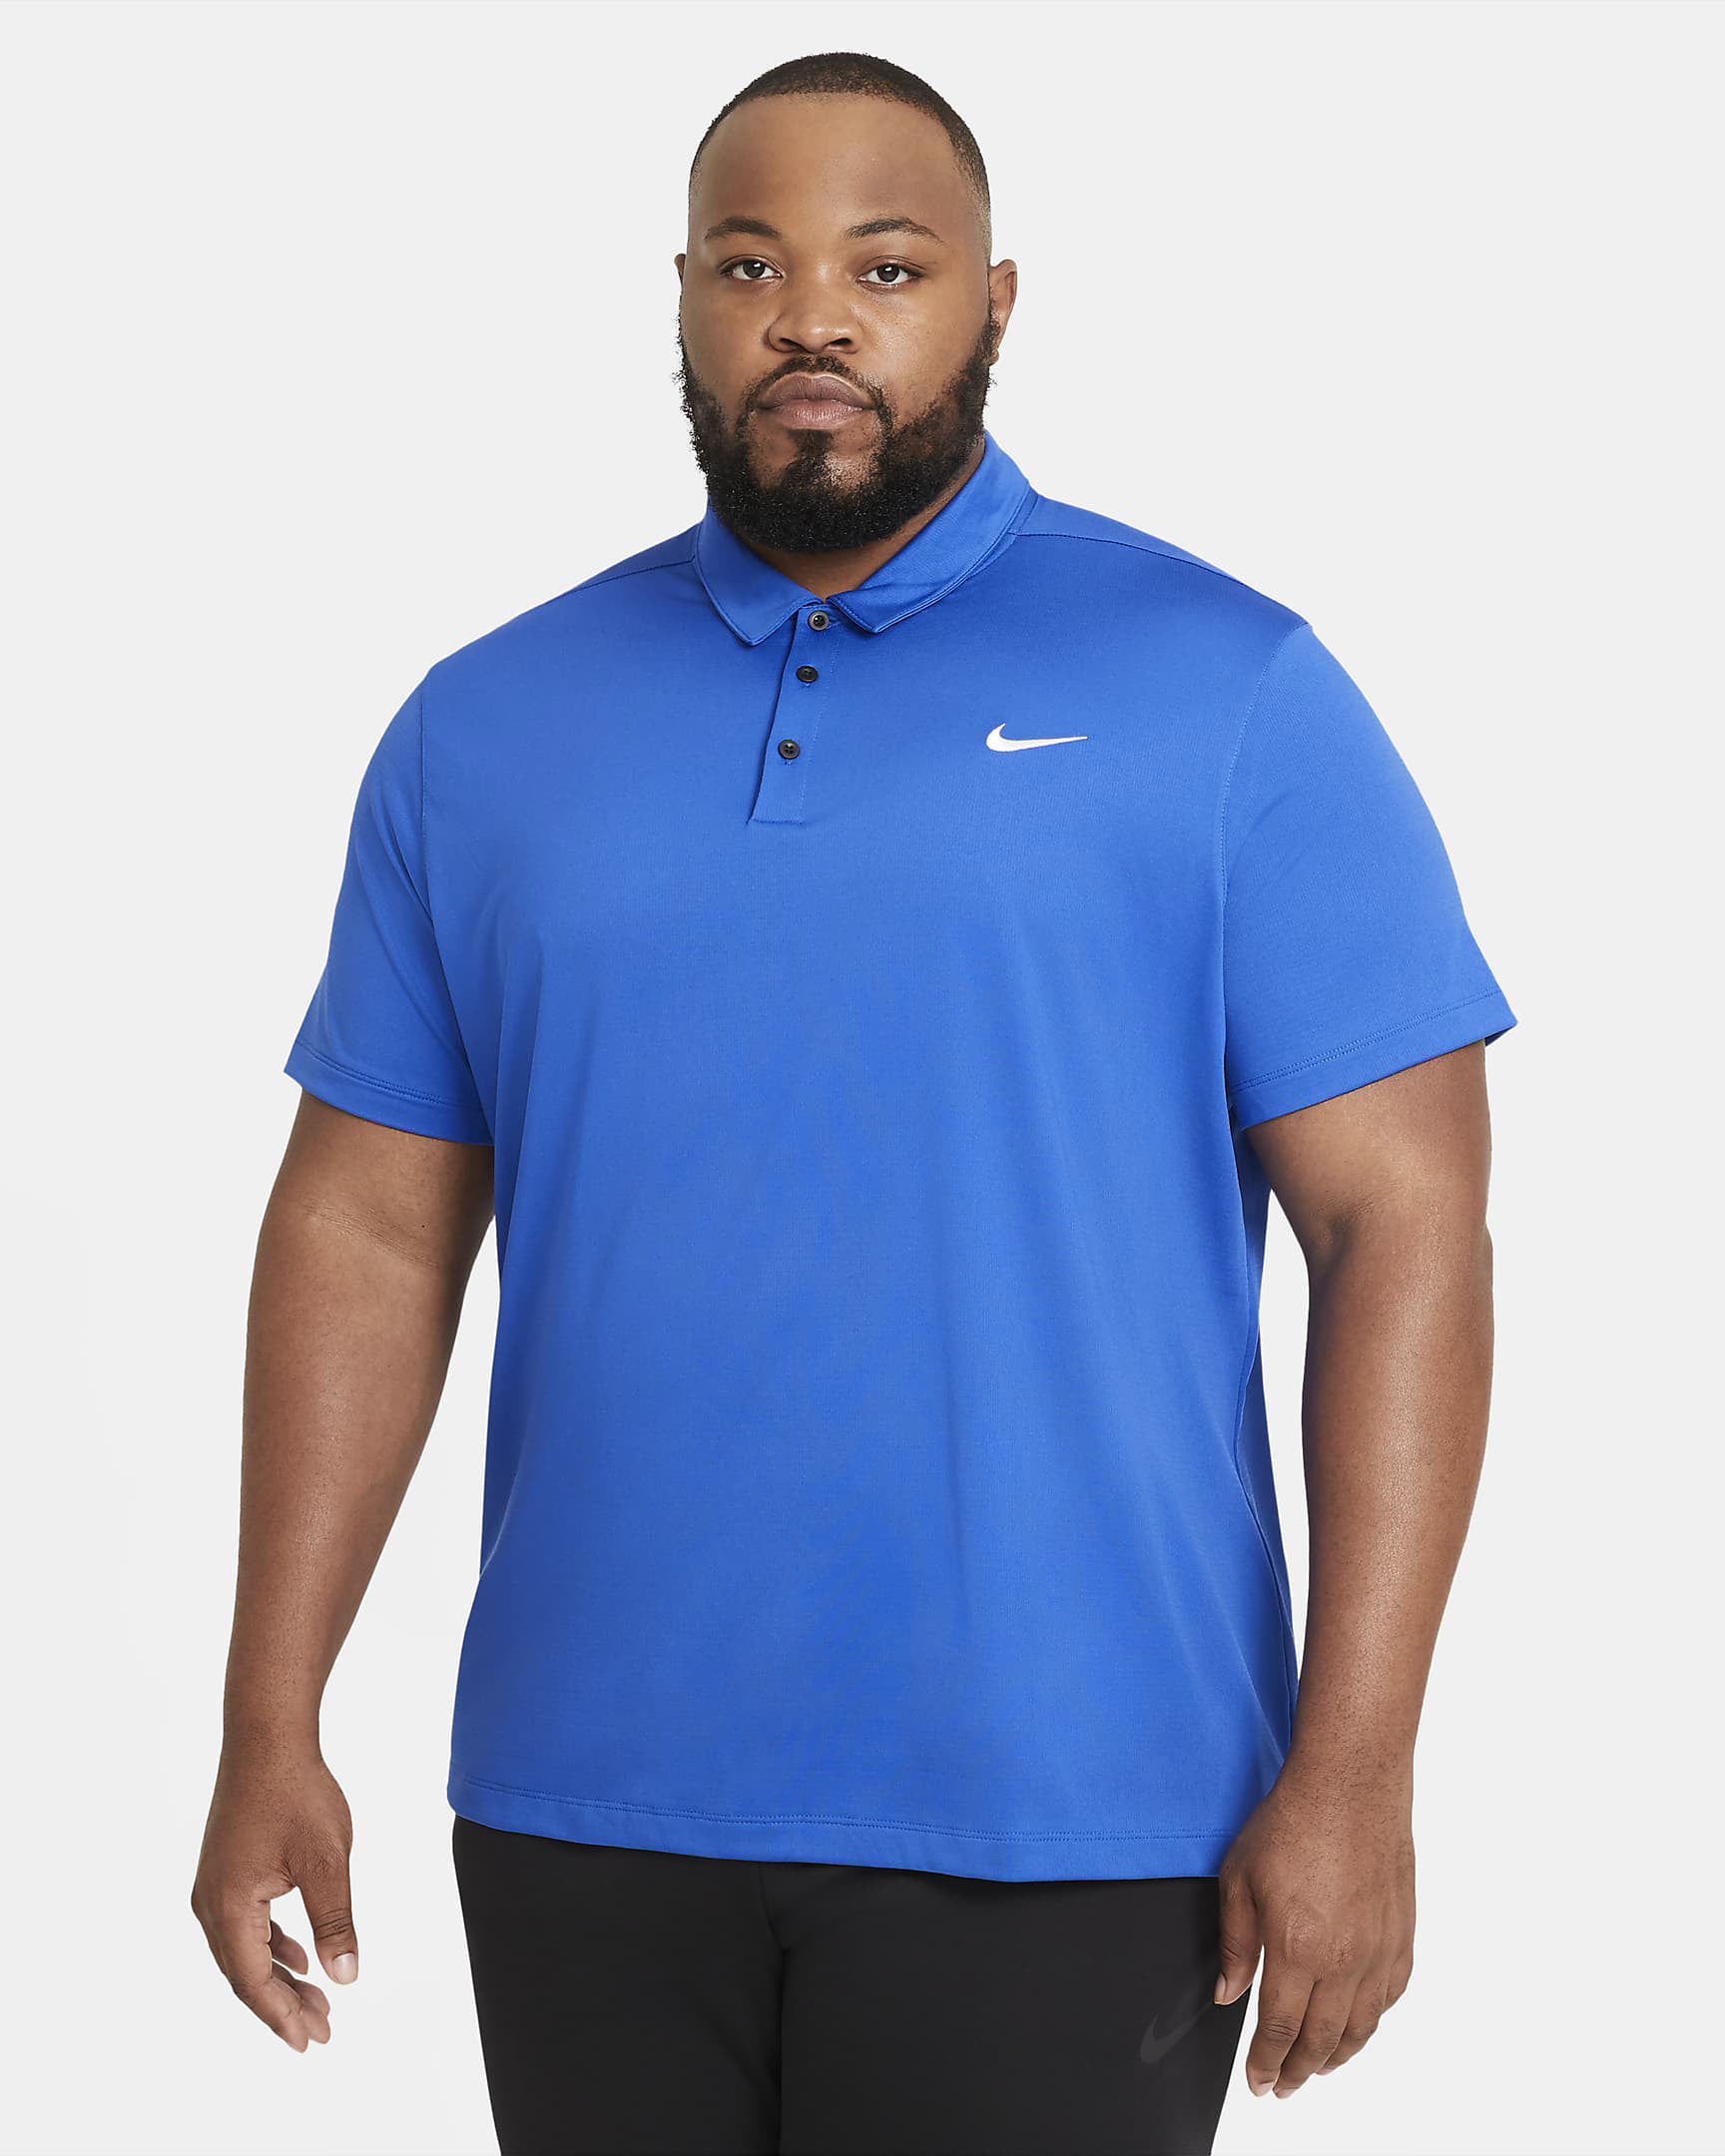 NIKE Men's Dri-Fit Short Shirt, Royal Blue, XXL - Walmart.com